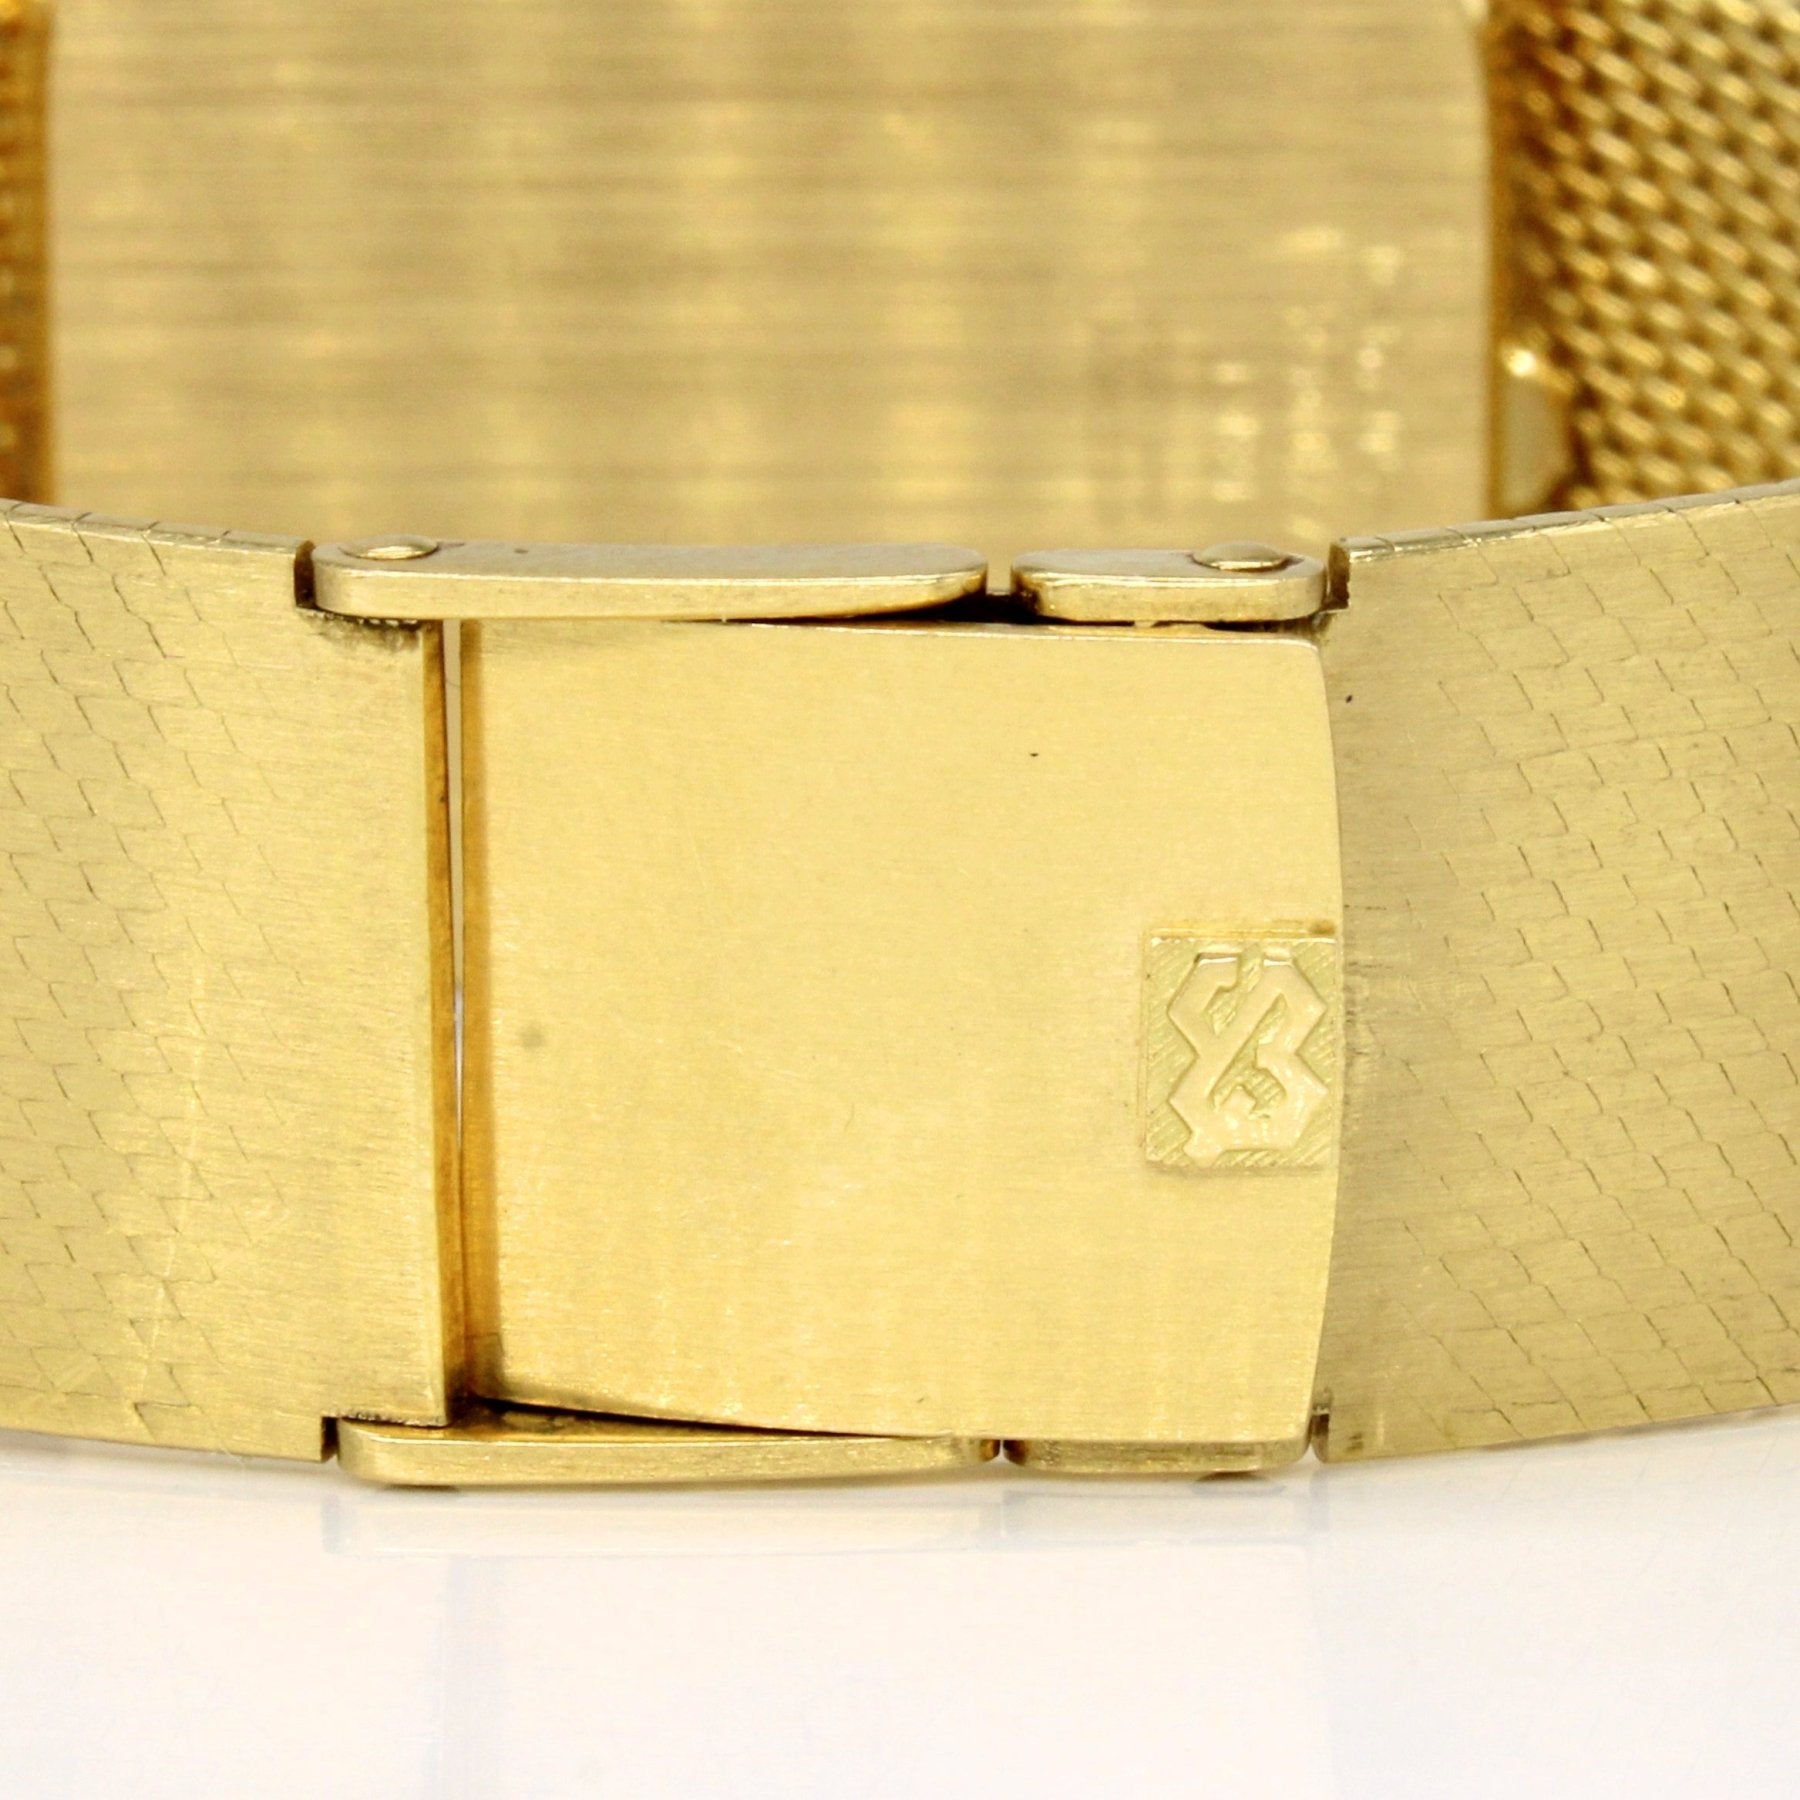 'Seiko' 18k Yellow Gold Watch | 7.75